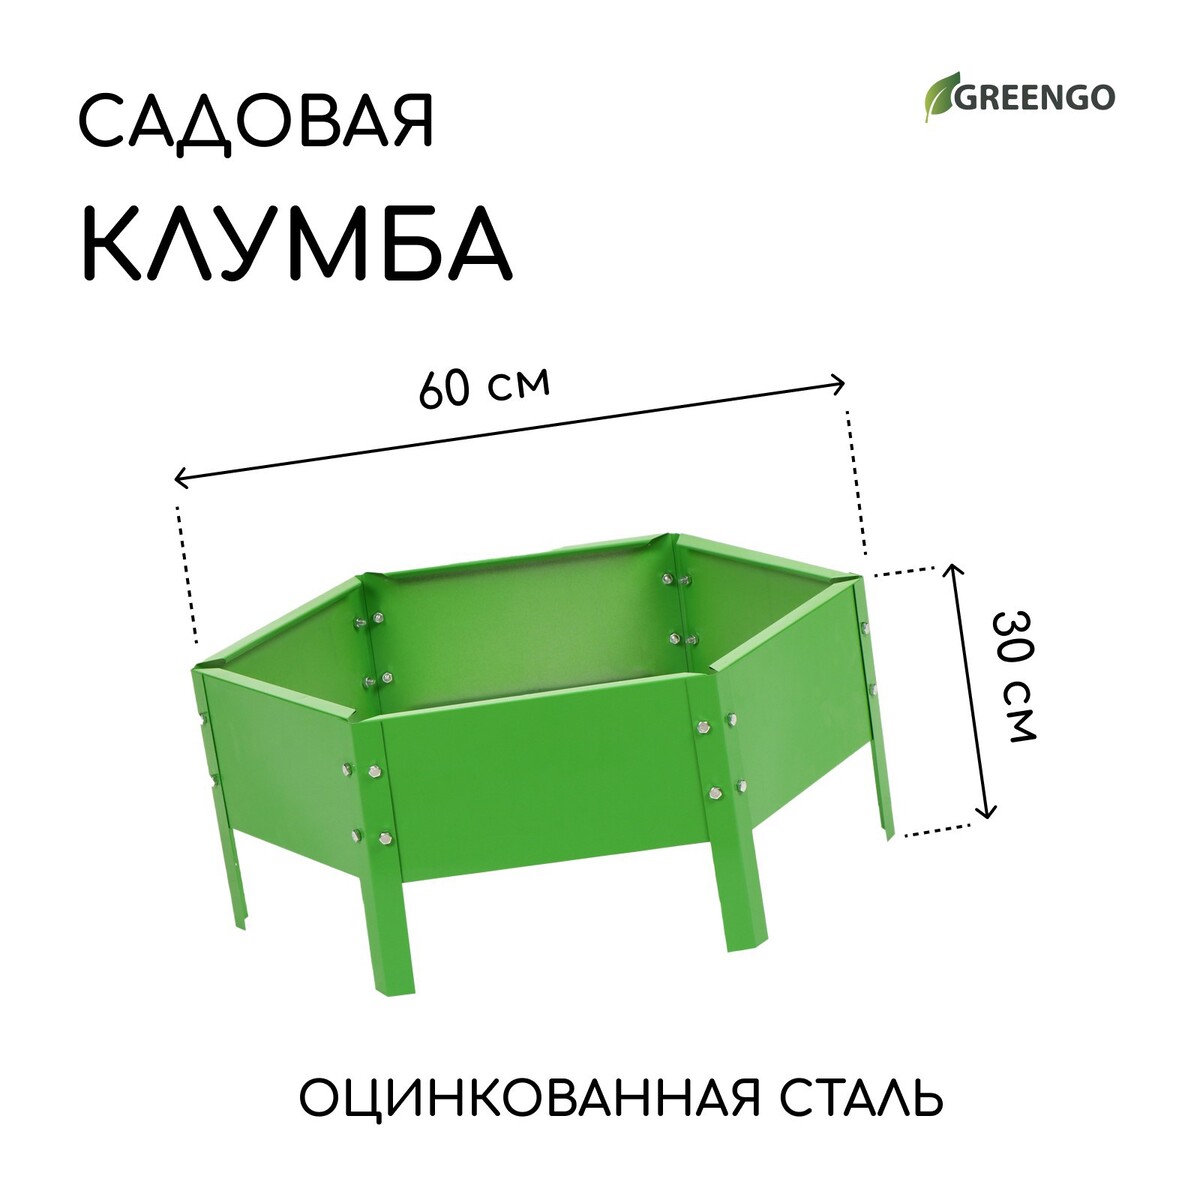 Клумба оцинкованная, d = 60 см, h = 15 см, ярко-зеленая, greengo клумба оцинкованная d 100 см h 15 см коричневая greengo